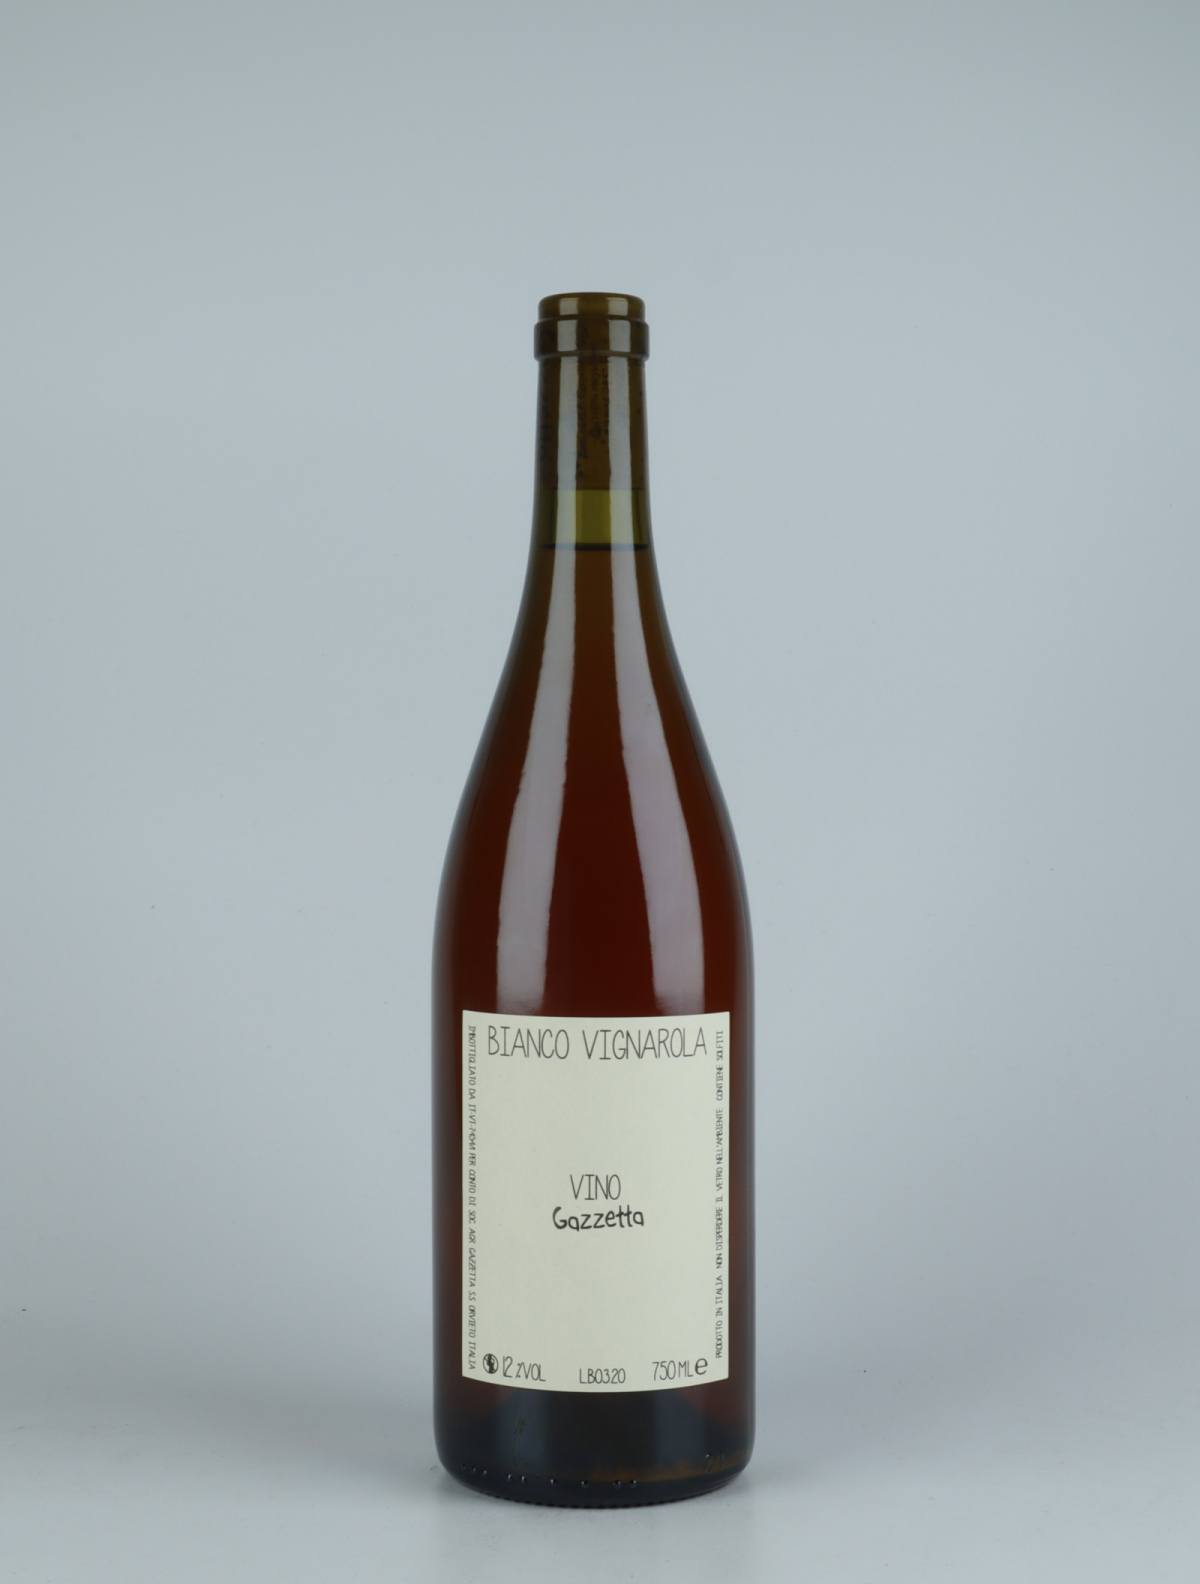 En flaske 2020 Vino Bianco Vignarola Orange vin fra Gazzetta, Lazio i Italien